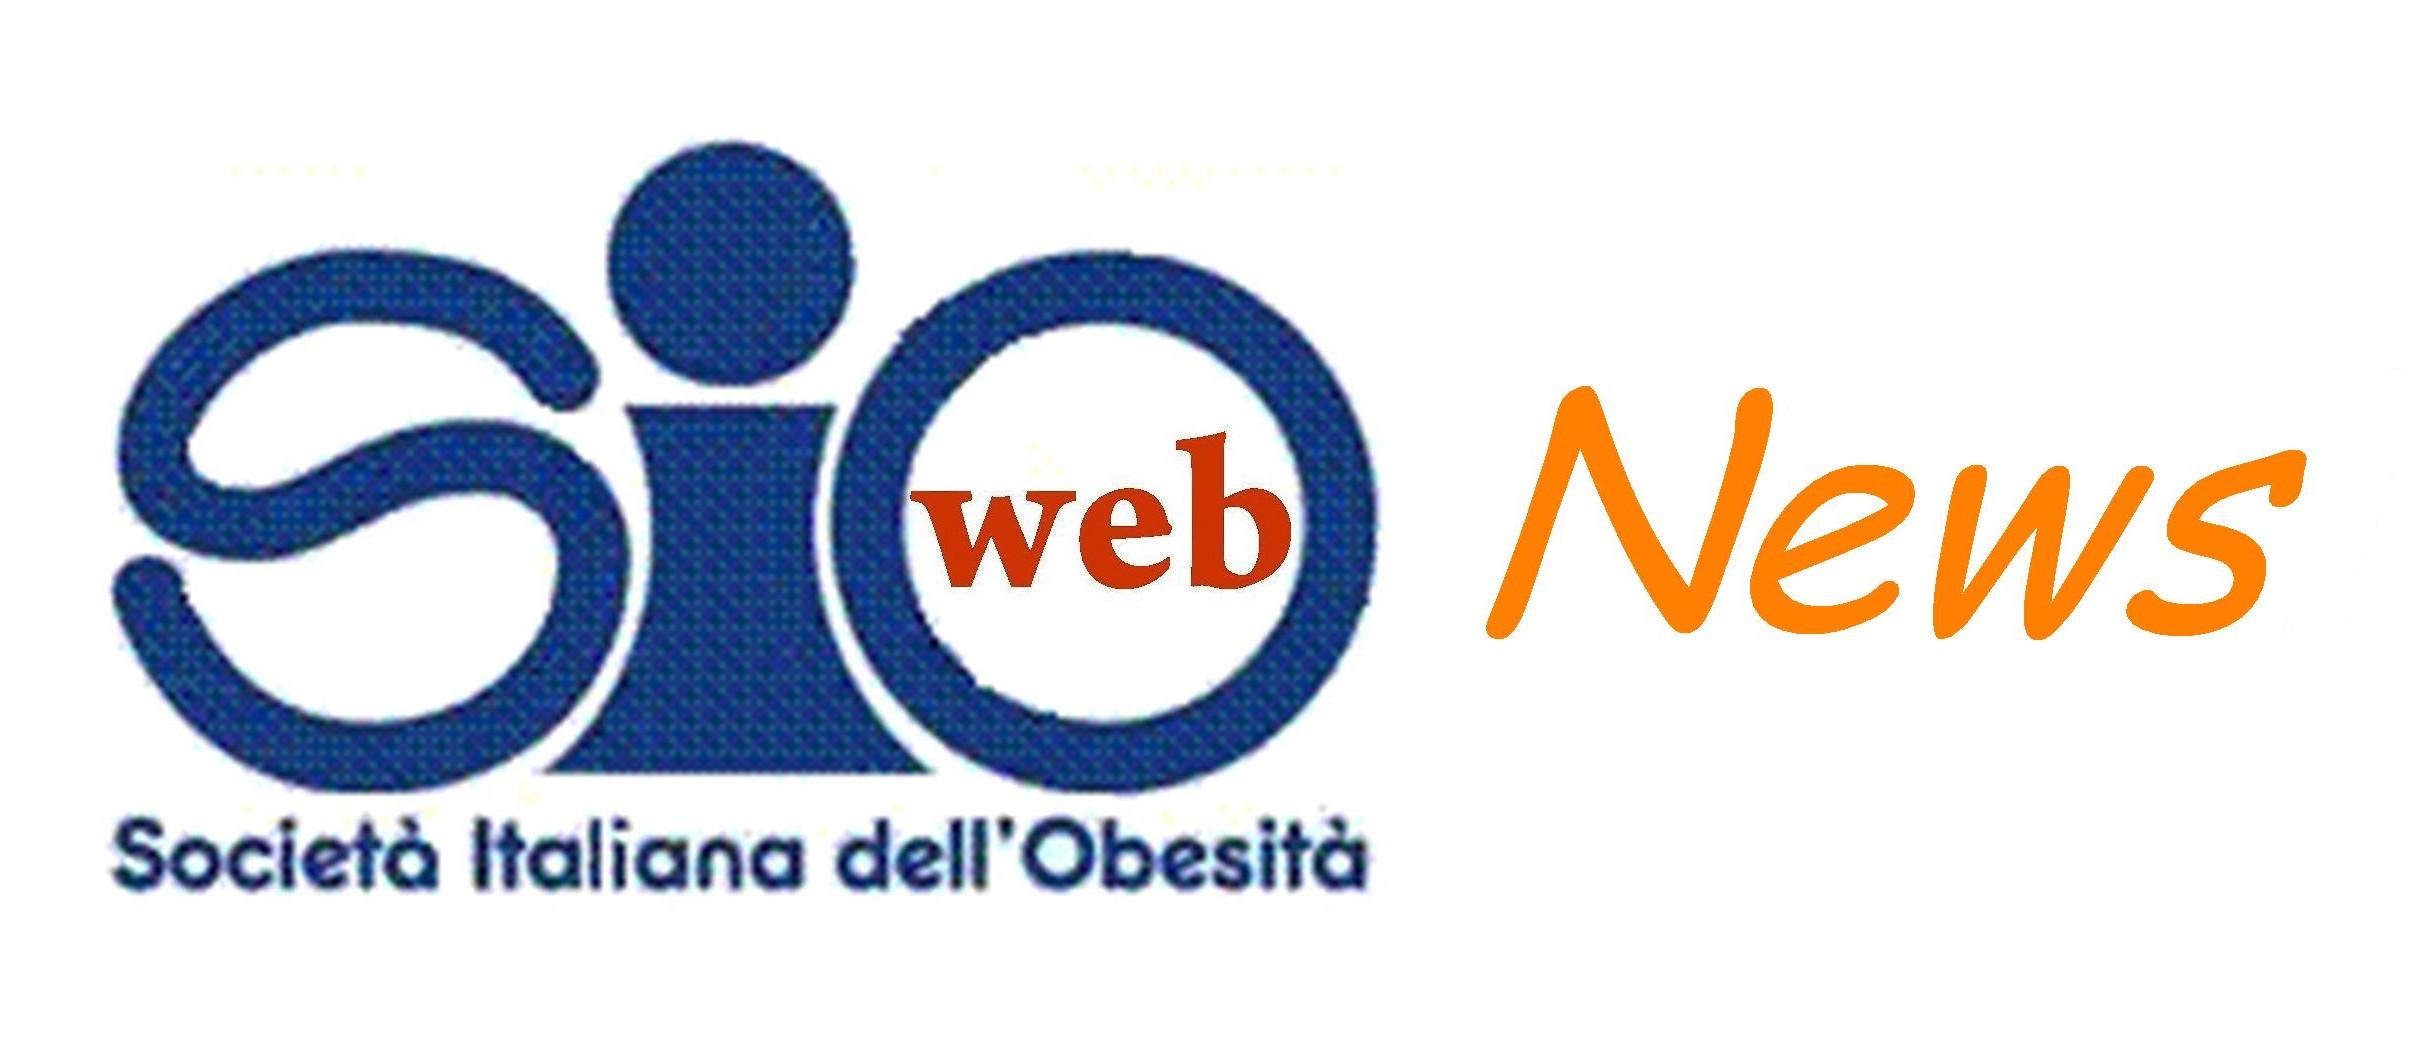 Logo News